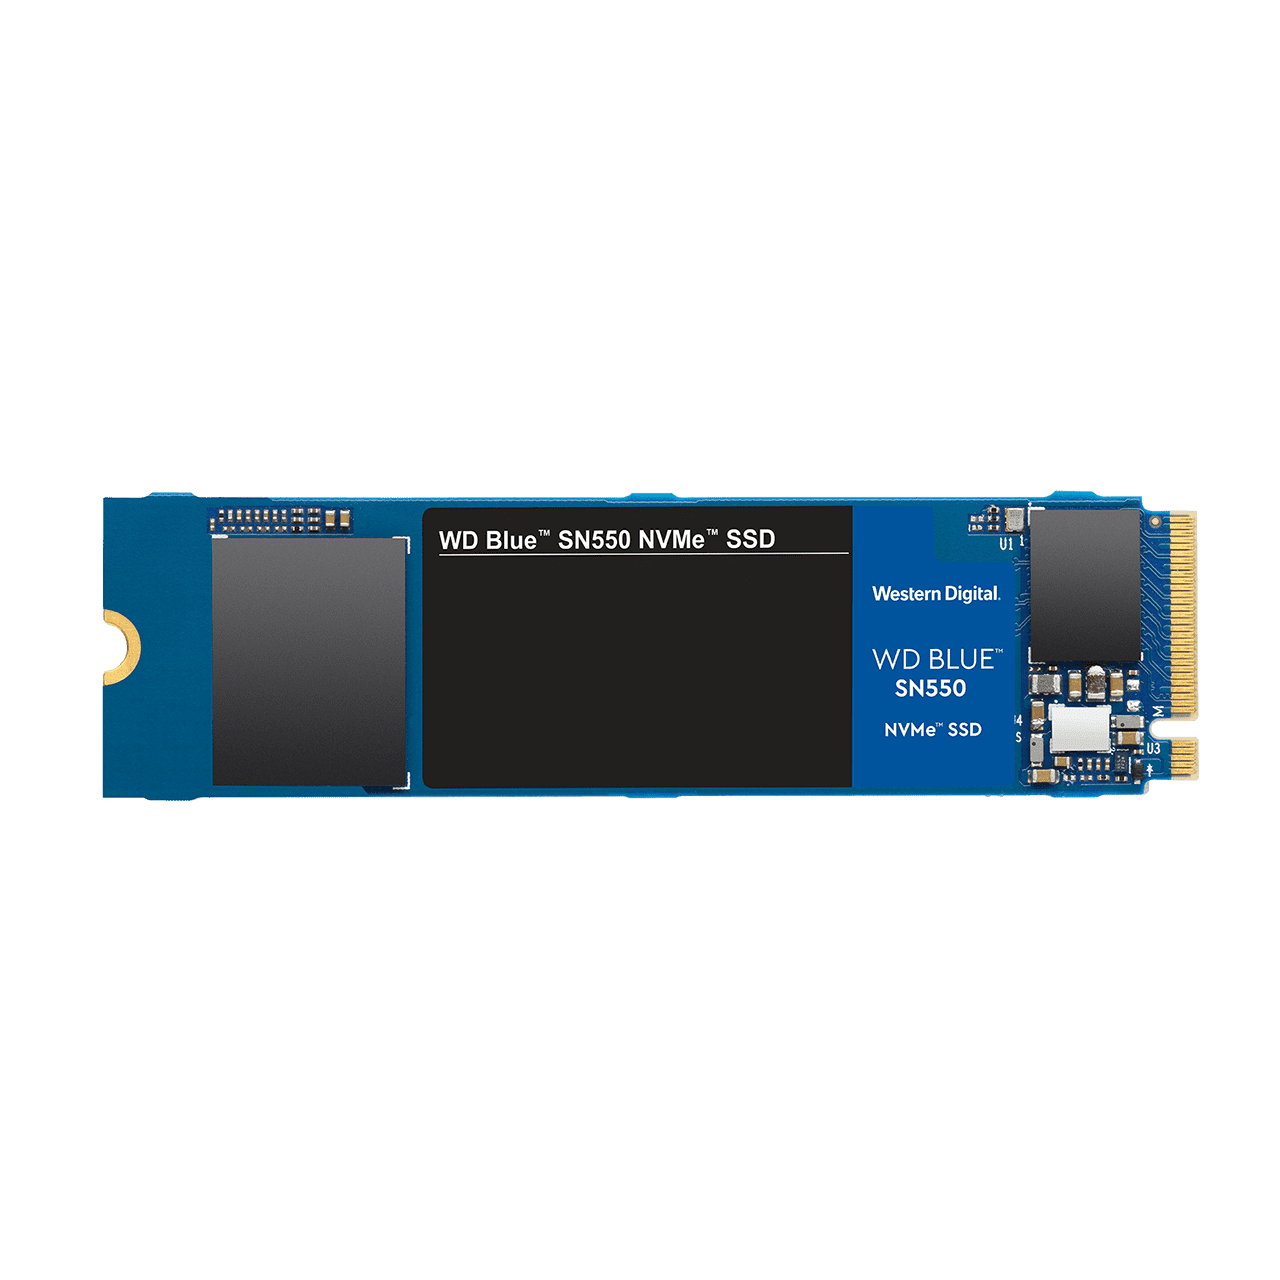 WD Blueâ„¢ SN550 NVMeâ„¢ Single-sided M.2 2280 PCIeÂ® Gen3 SSD - 250GB Read Performance Up to 2400MB/s